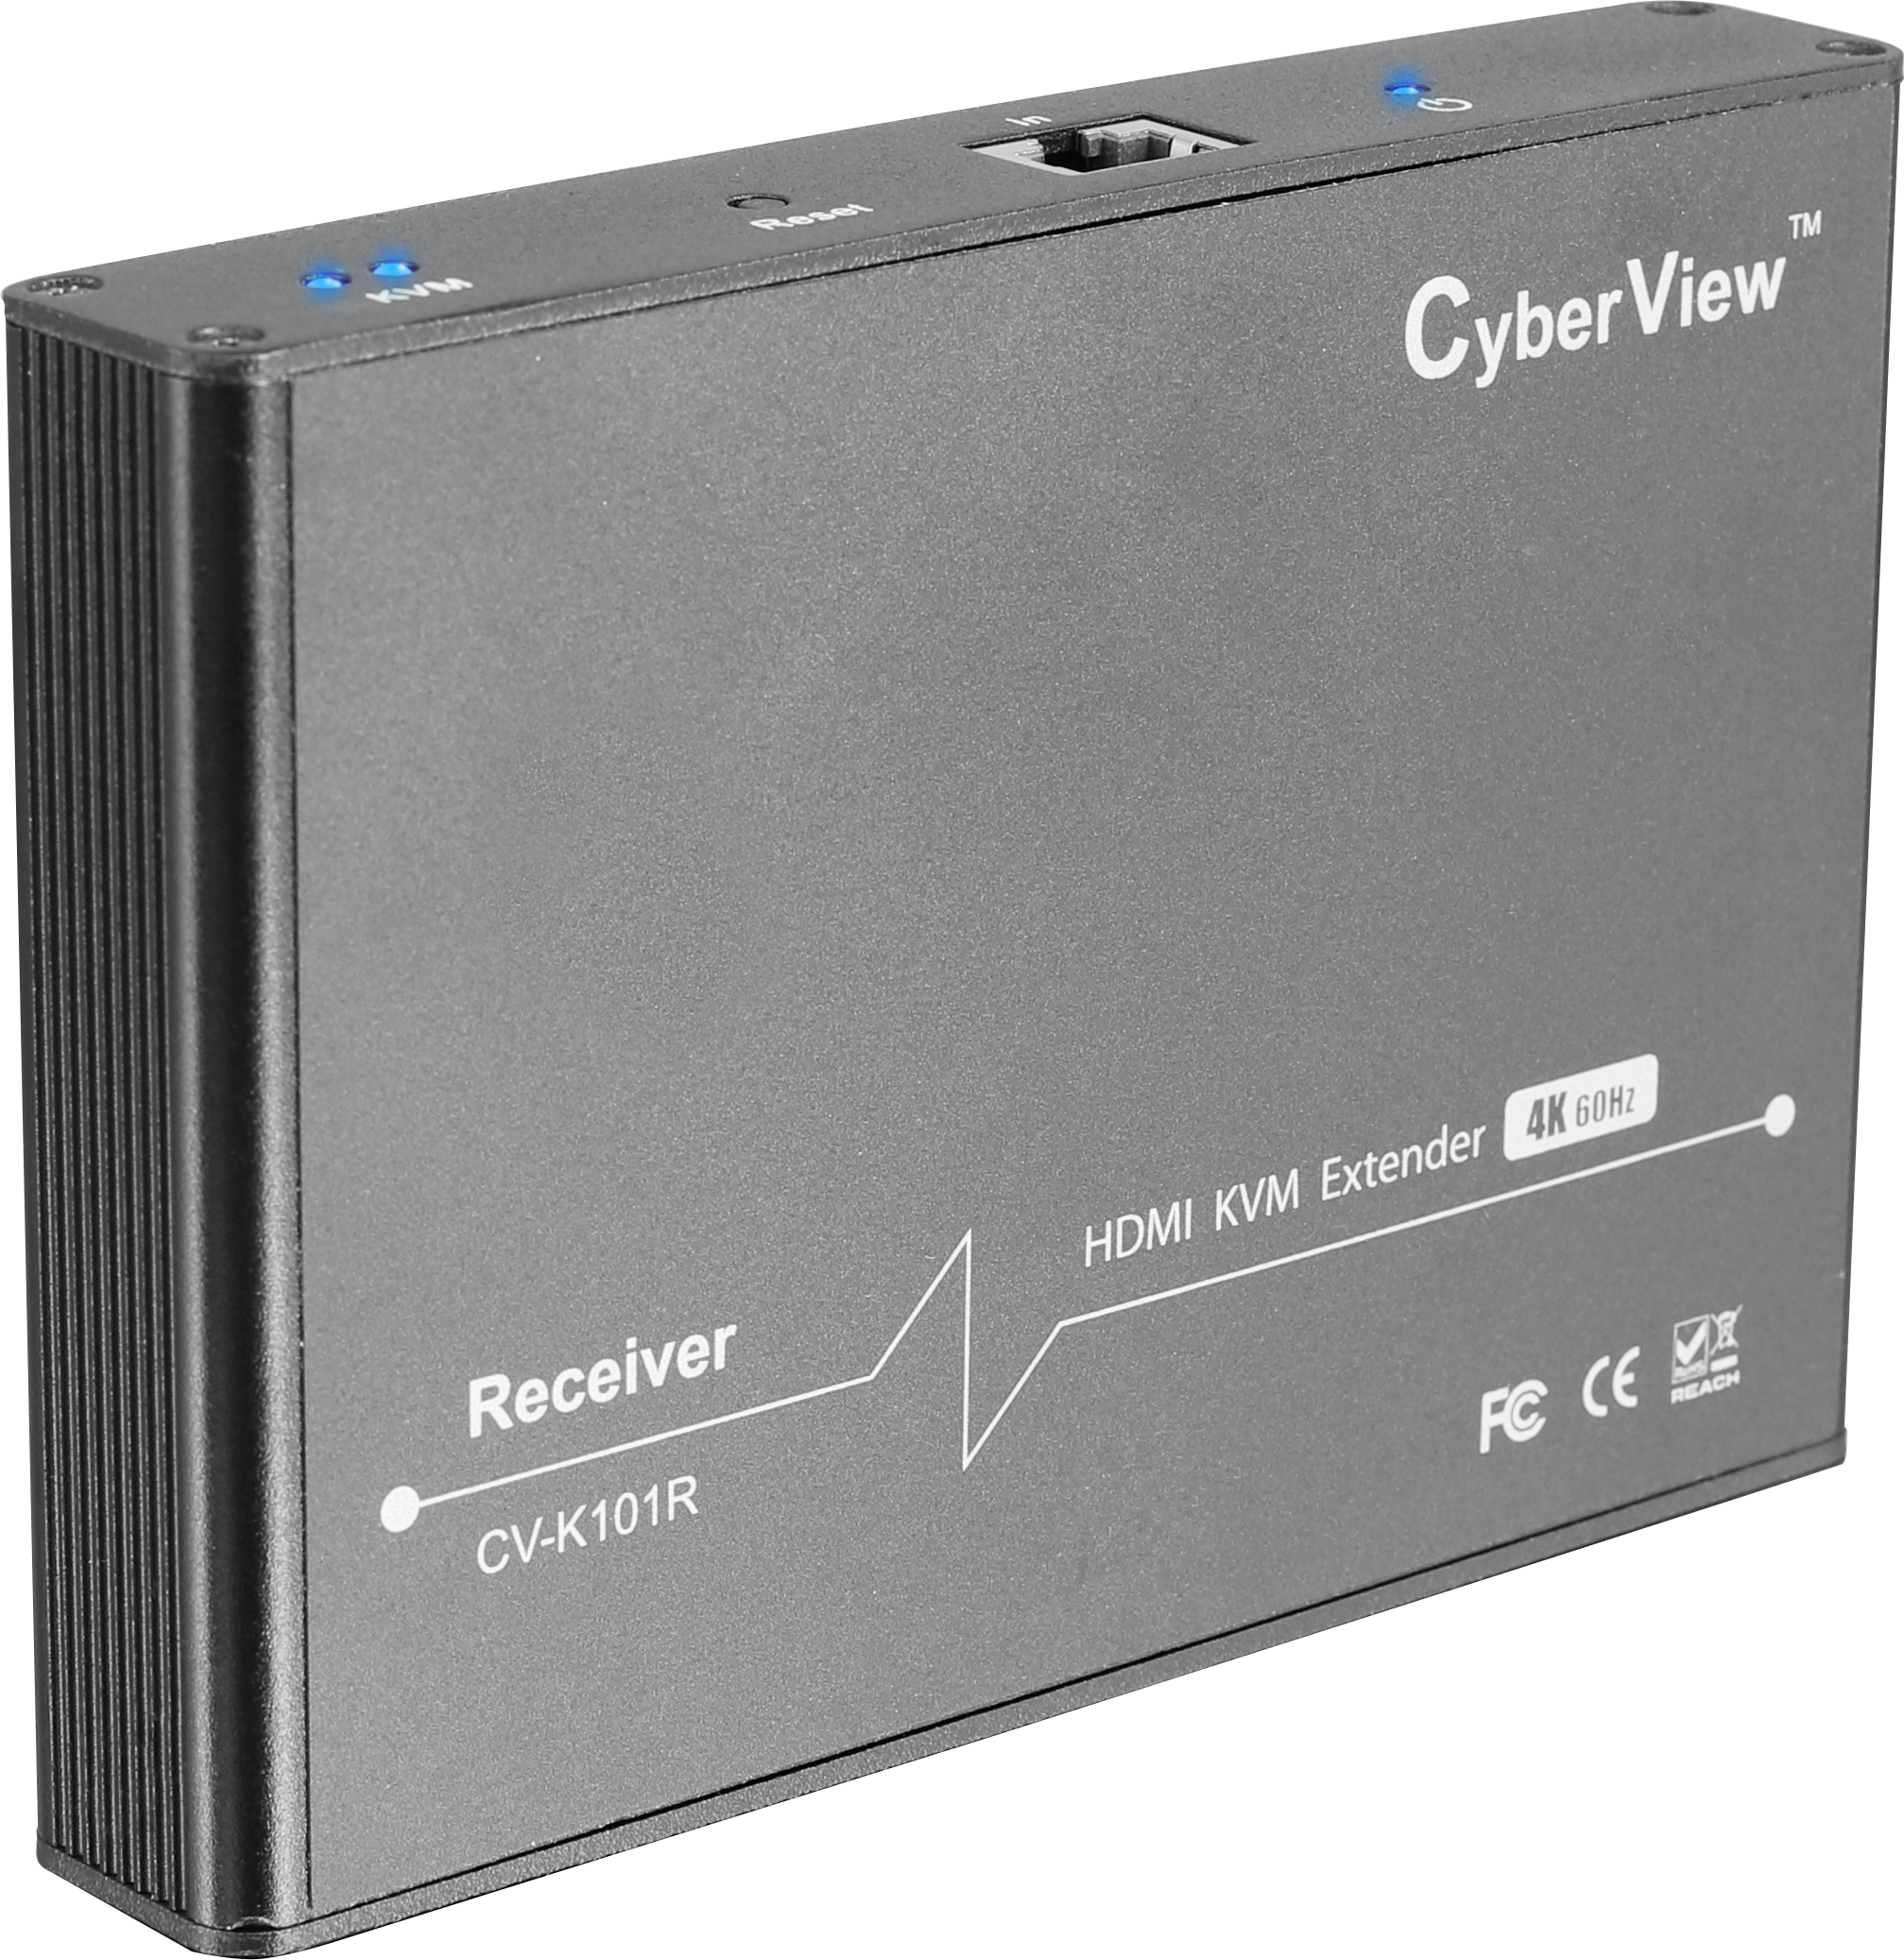 CV-K101R, CyberView 4K HDMI KVM Extender (Receiver)